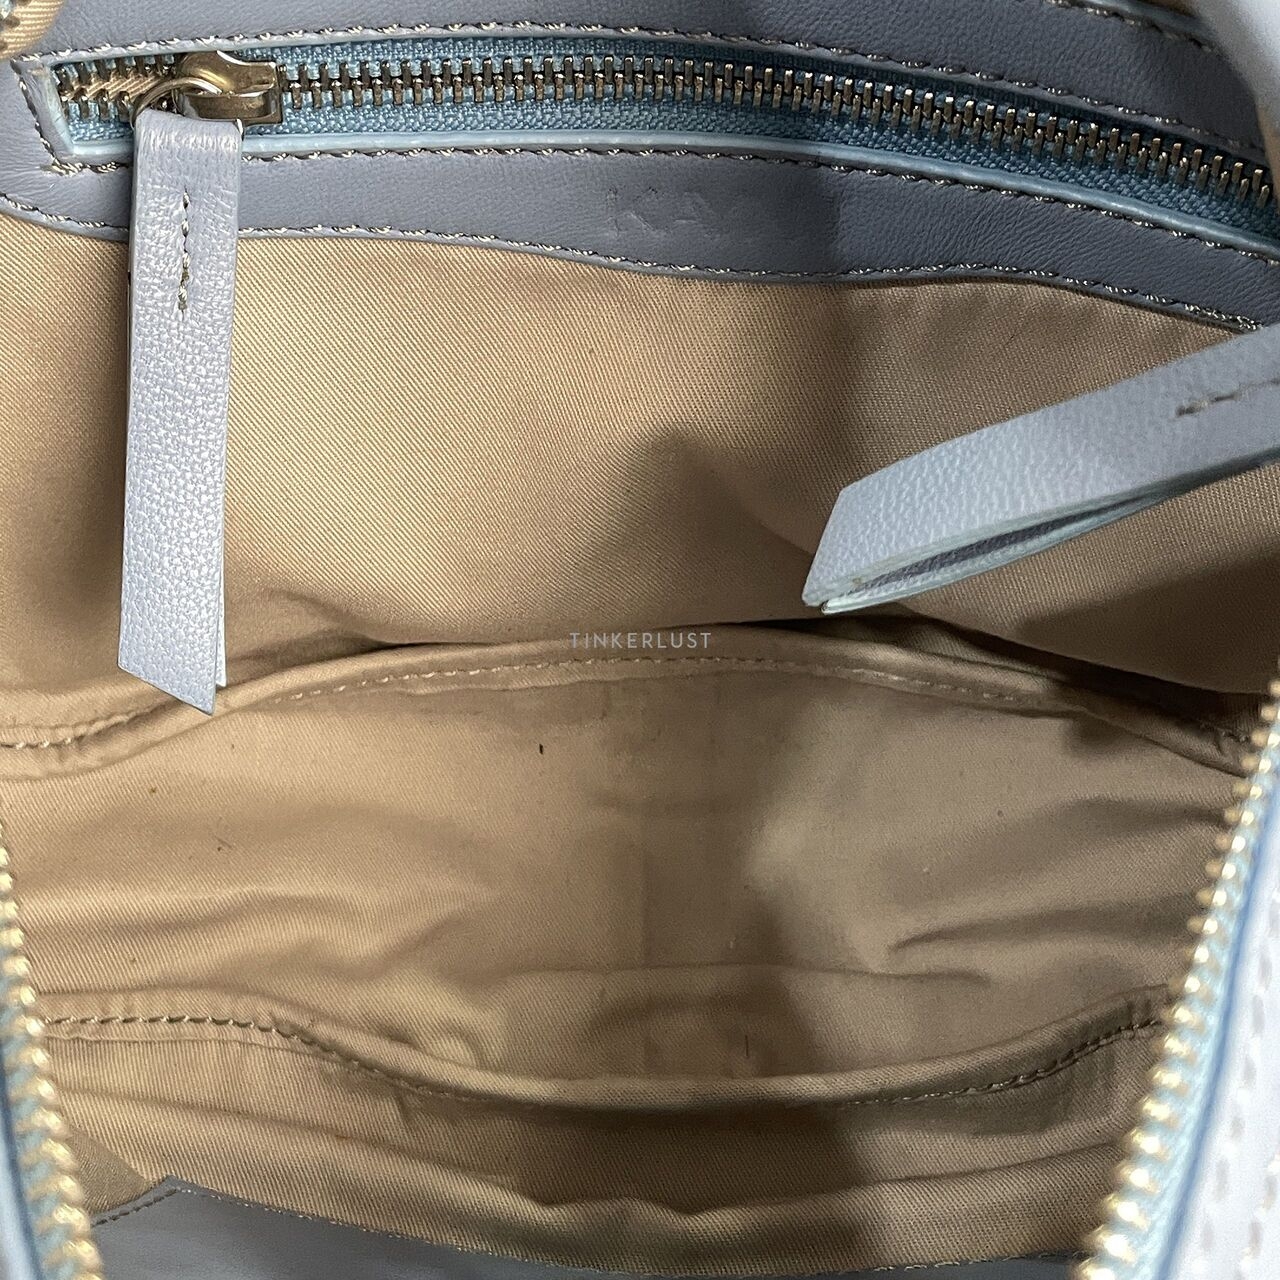 Kaynn Blue Shoulder Bag